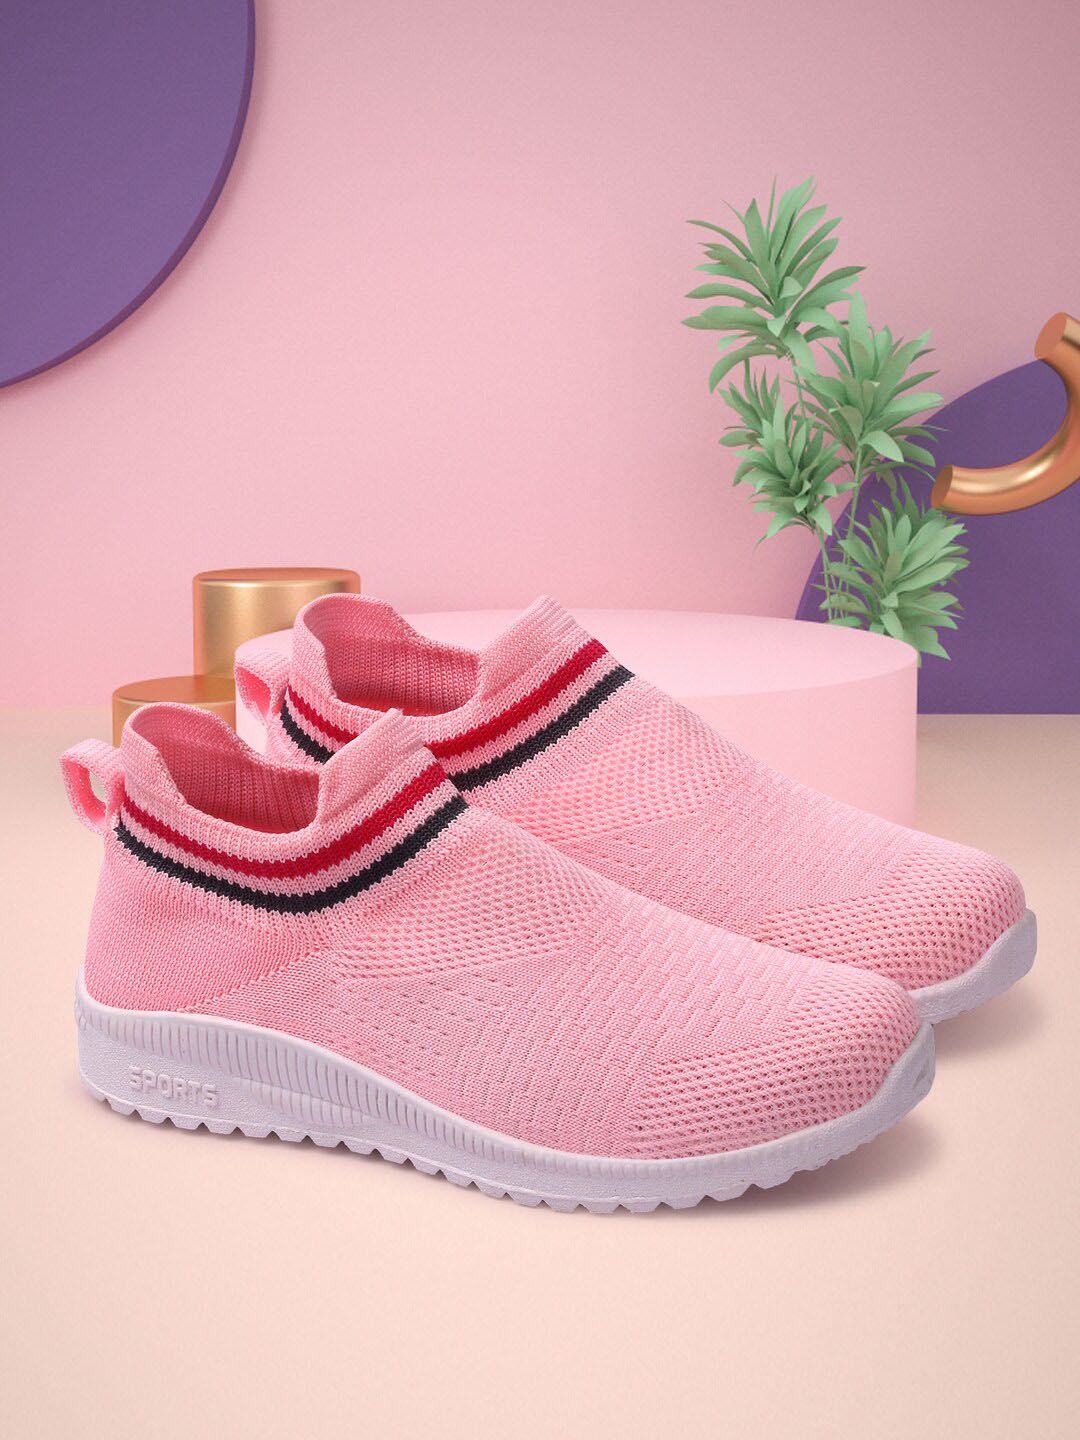 RINDAS Women Pink Textured Slip-On Sneakers Price in India